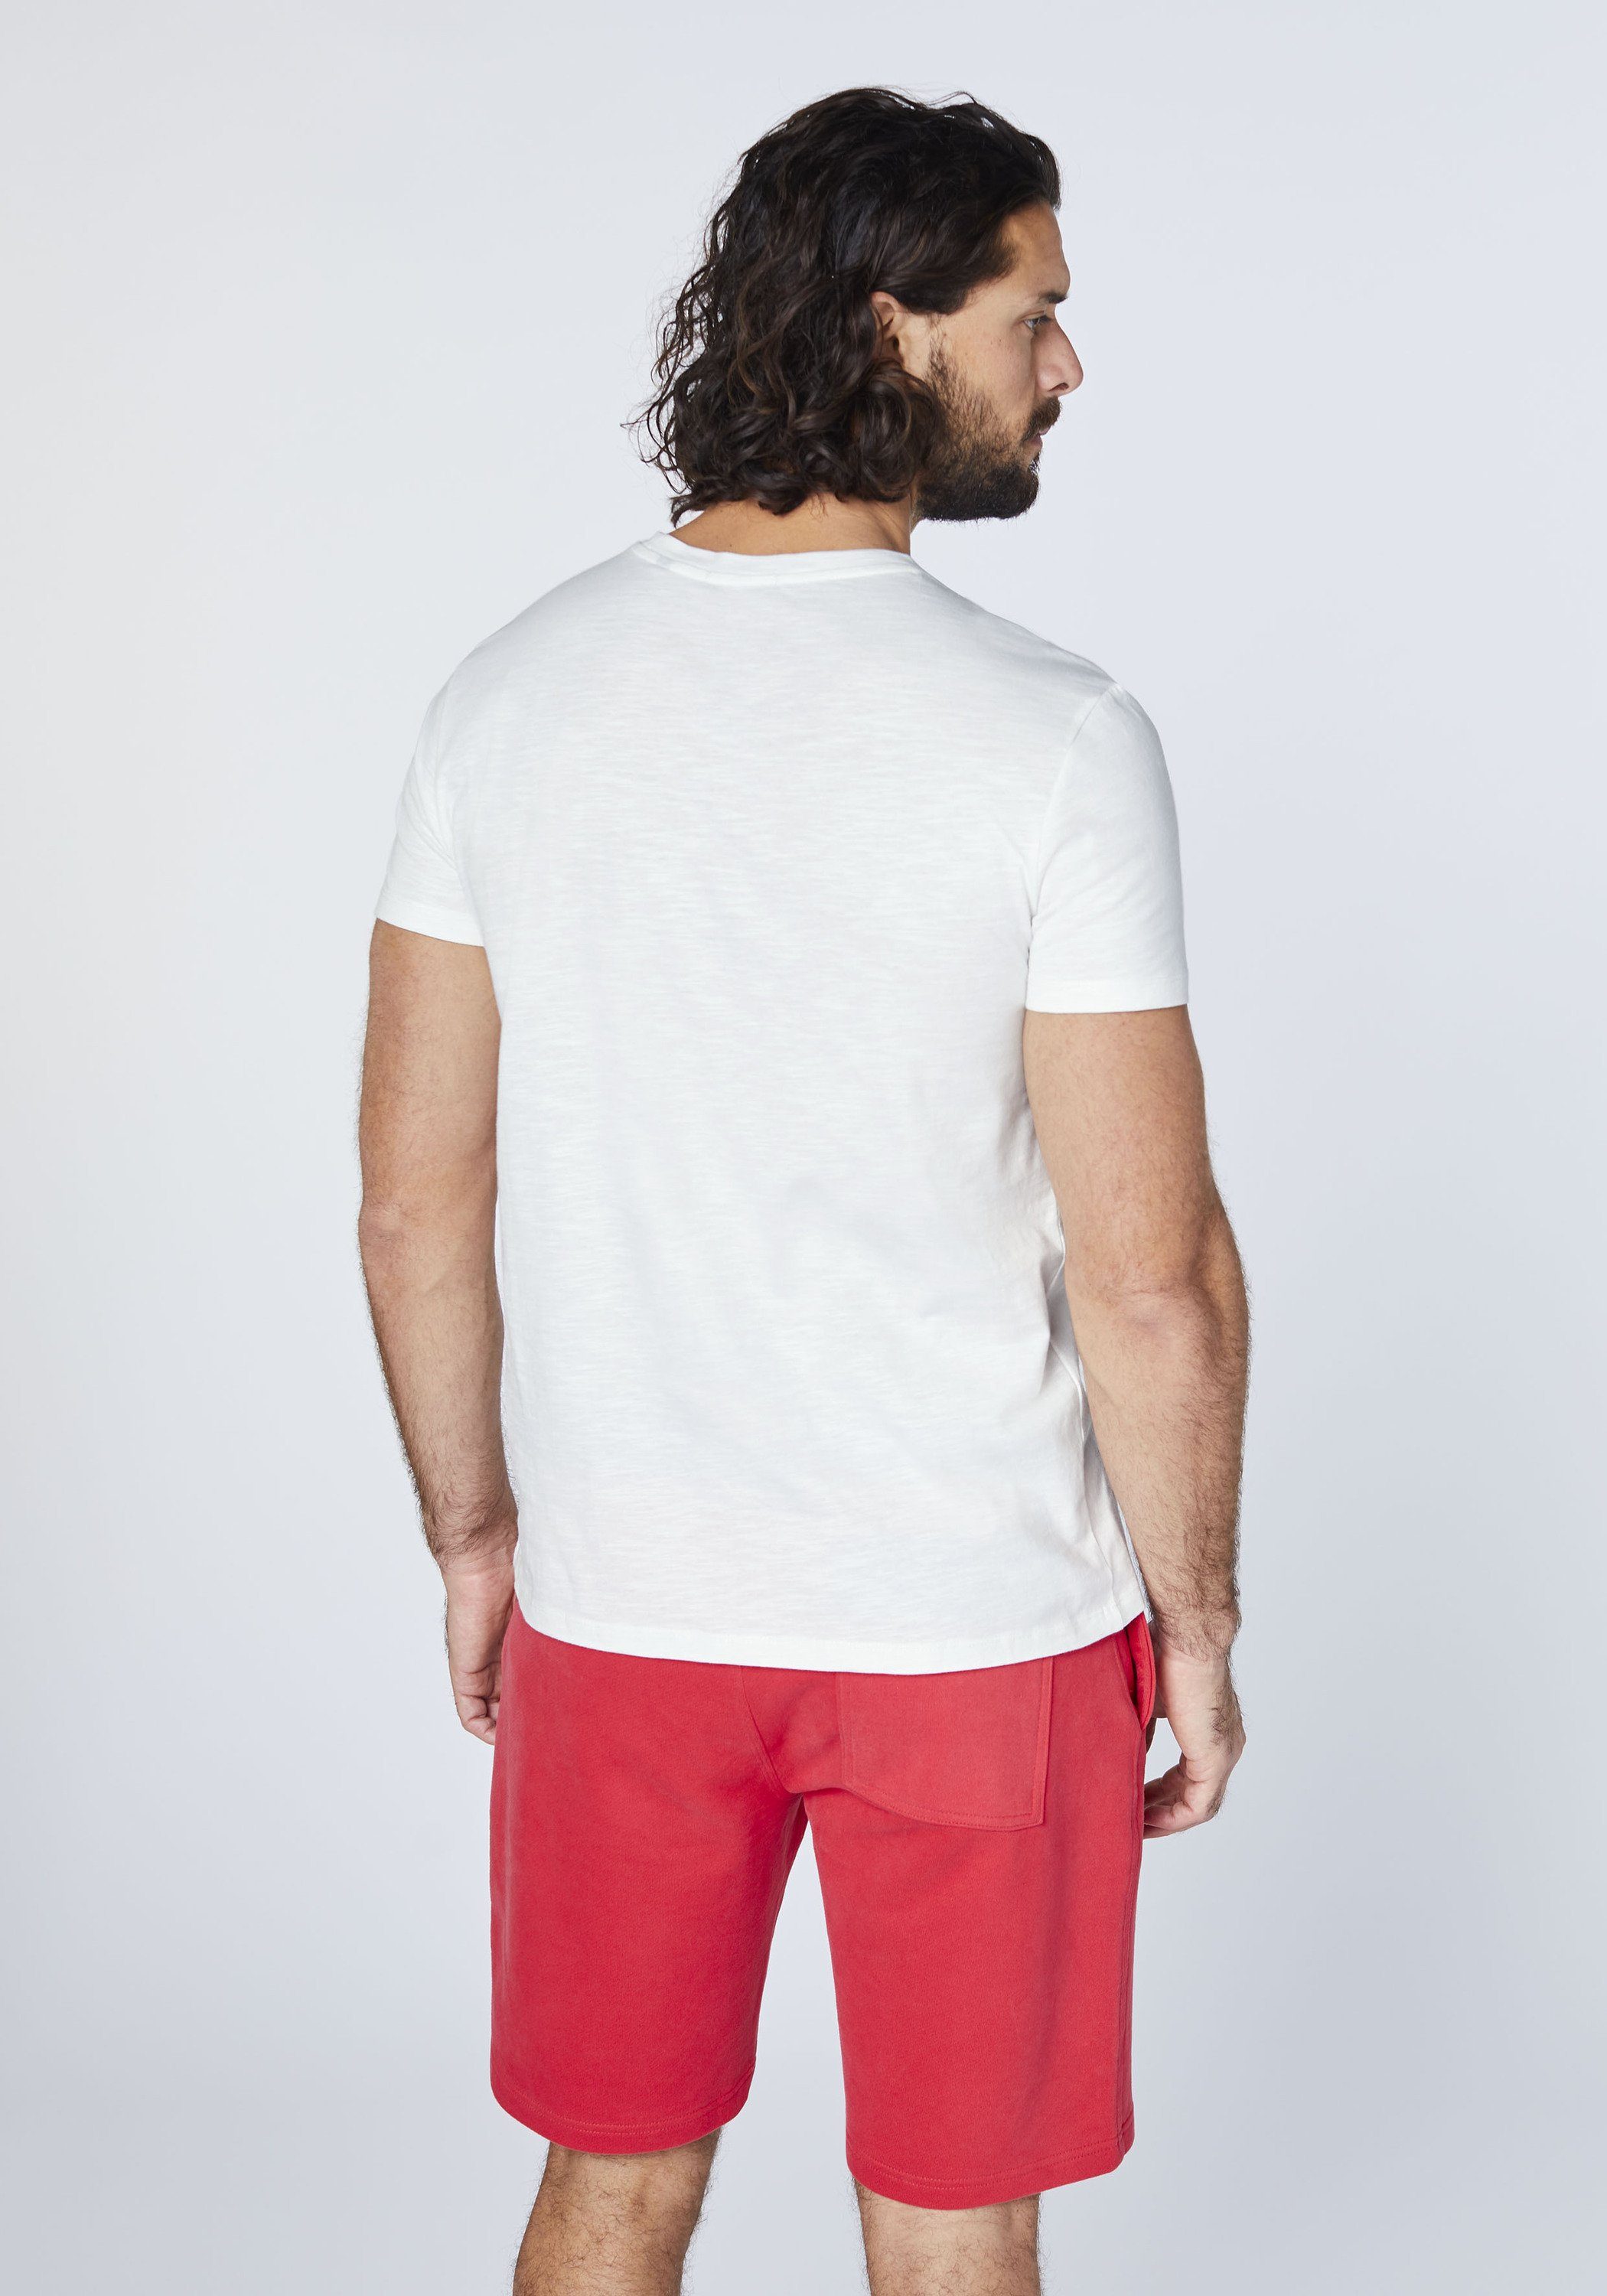 gedrucktem Print-Shirt Label-Symbol mit 1 White Star T-Shirt Chiemsee